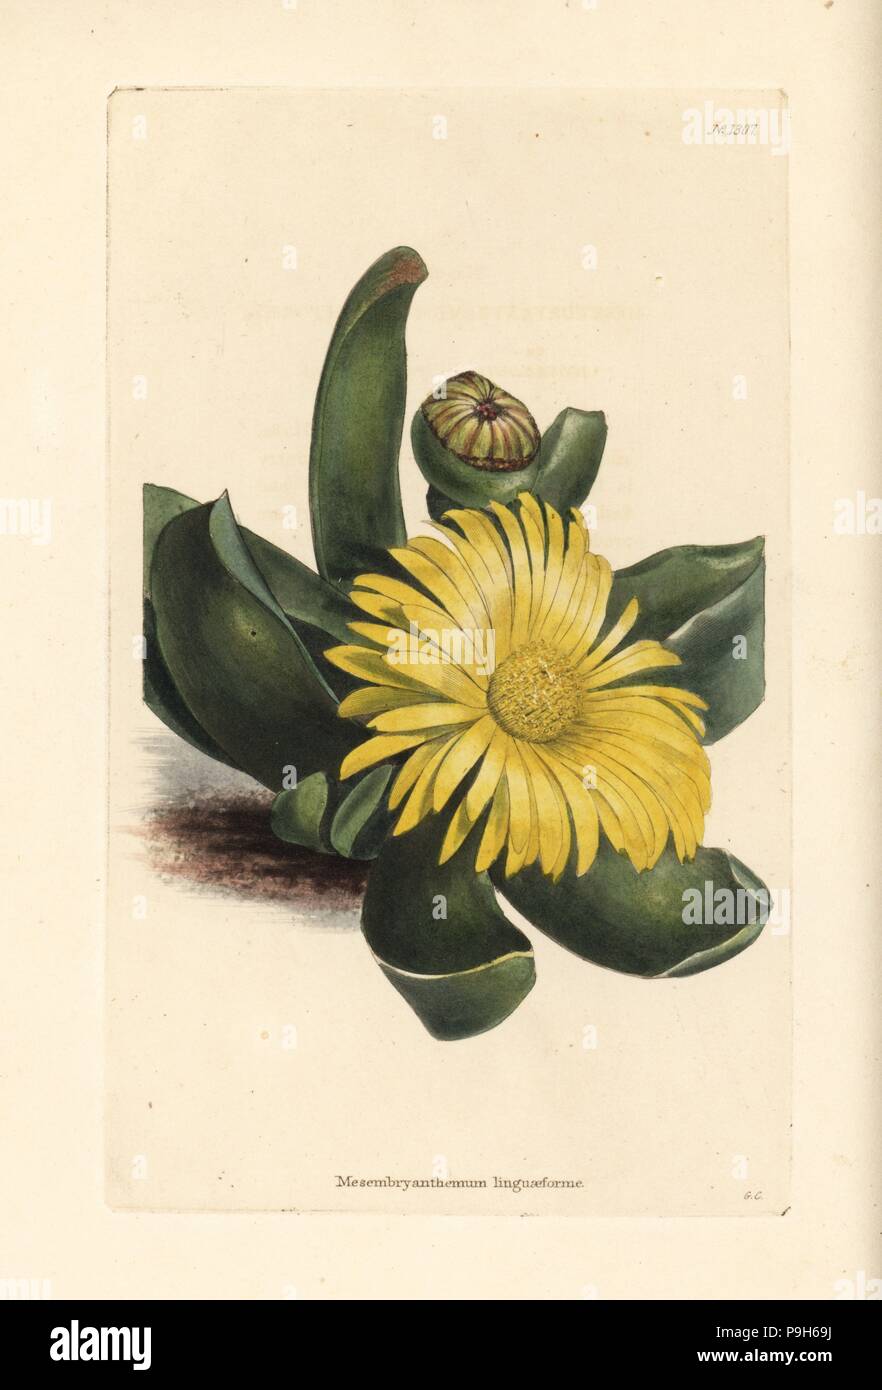 Glottiphyllum linguiforme (Mesembryanthemum linguaeforme). Handcoloured copperplate engraving by George Cooke from Conrad Loddiges' Botanical Cabinet, Hackney, 1828. Stock Photo